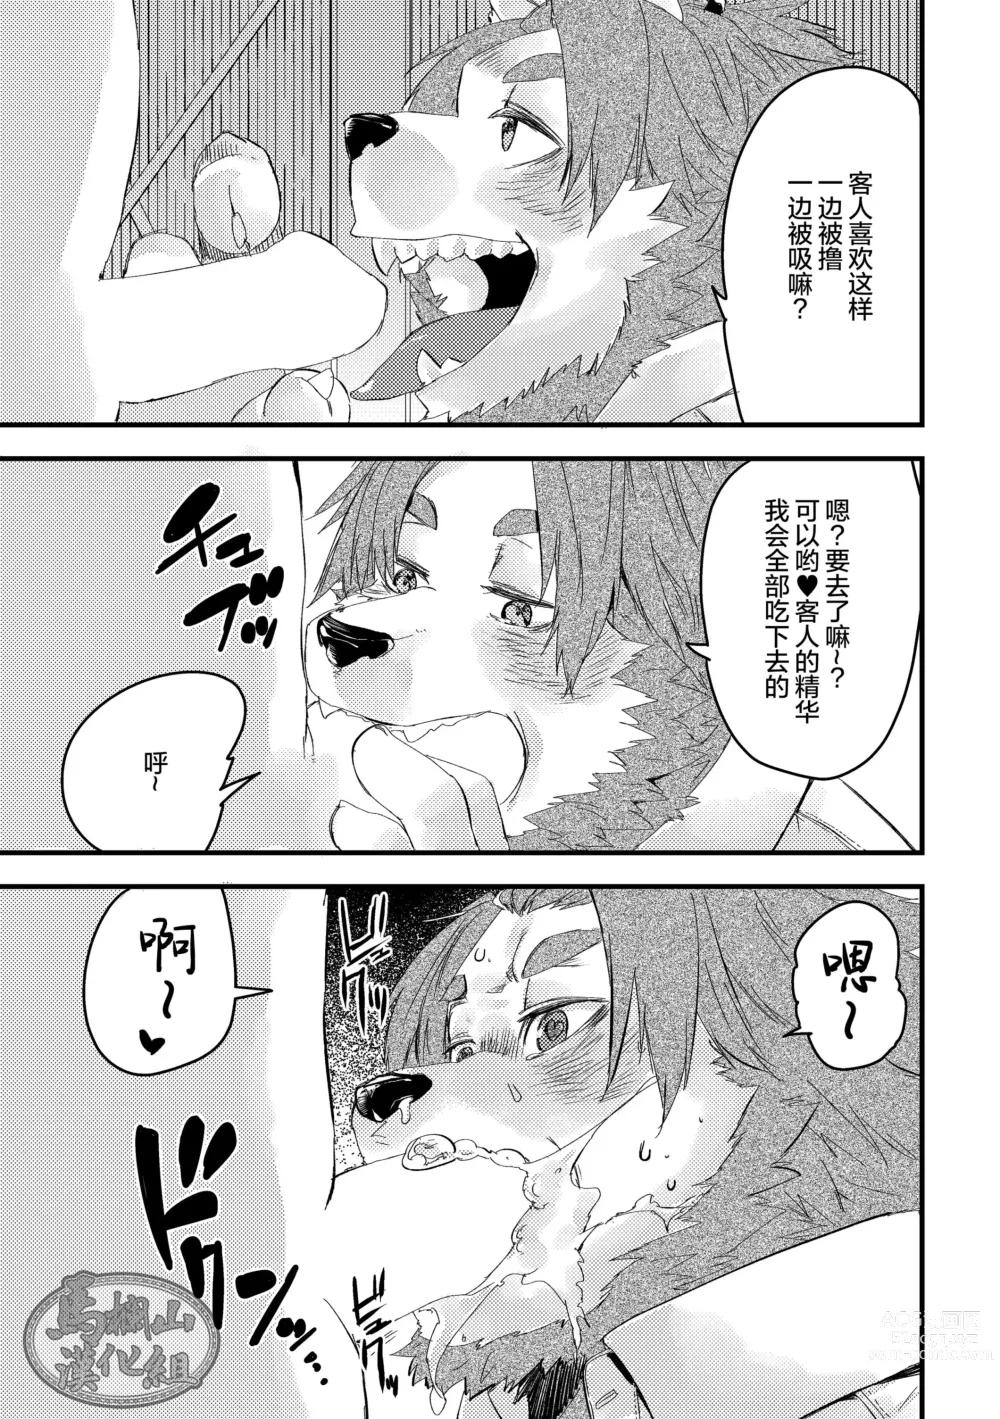 Page 6 of manga 獅子は兎を狩るのにも